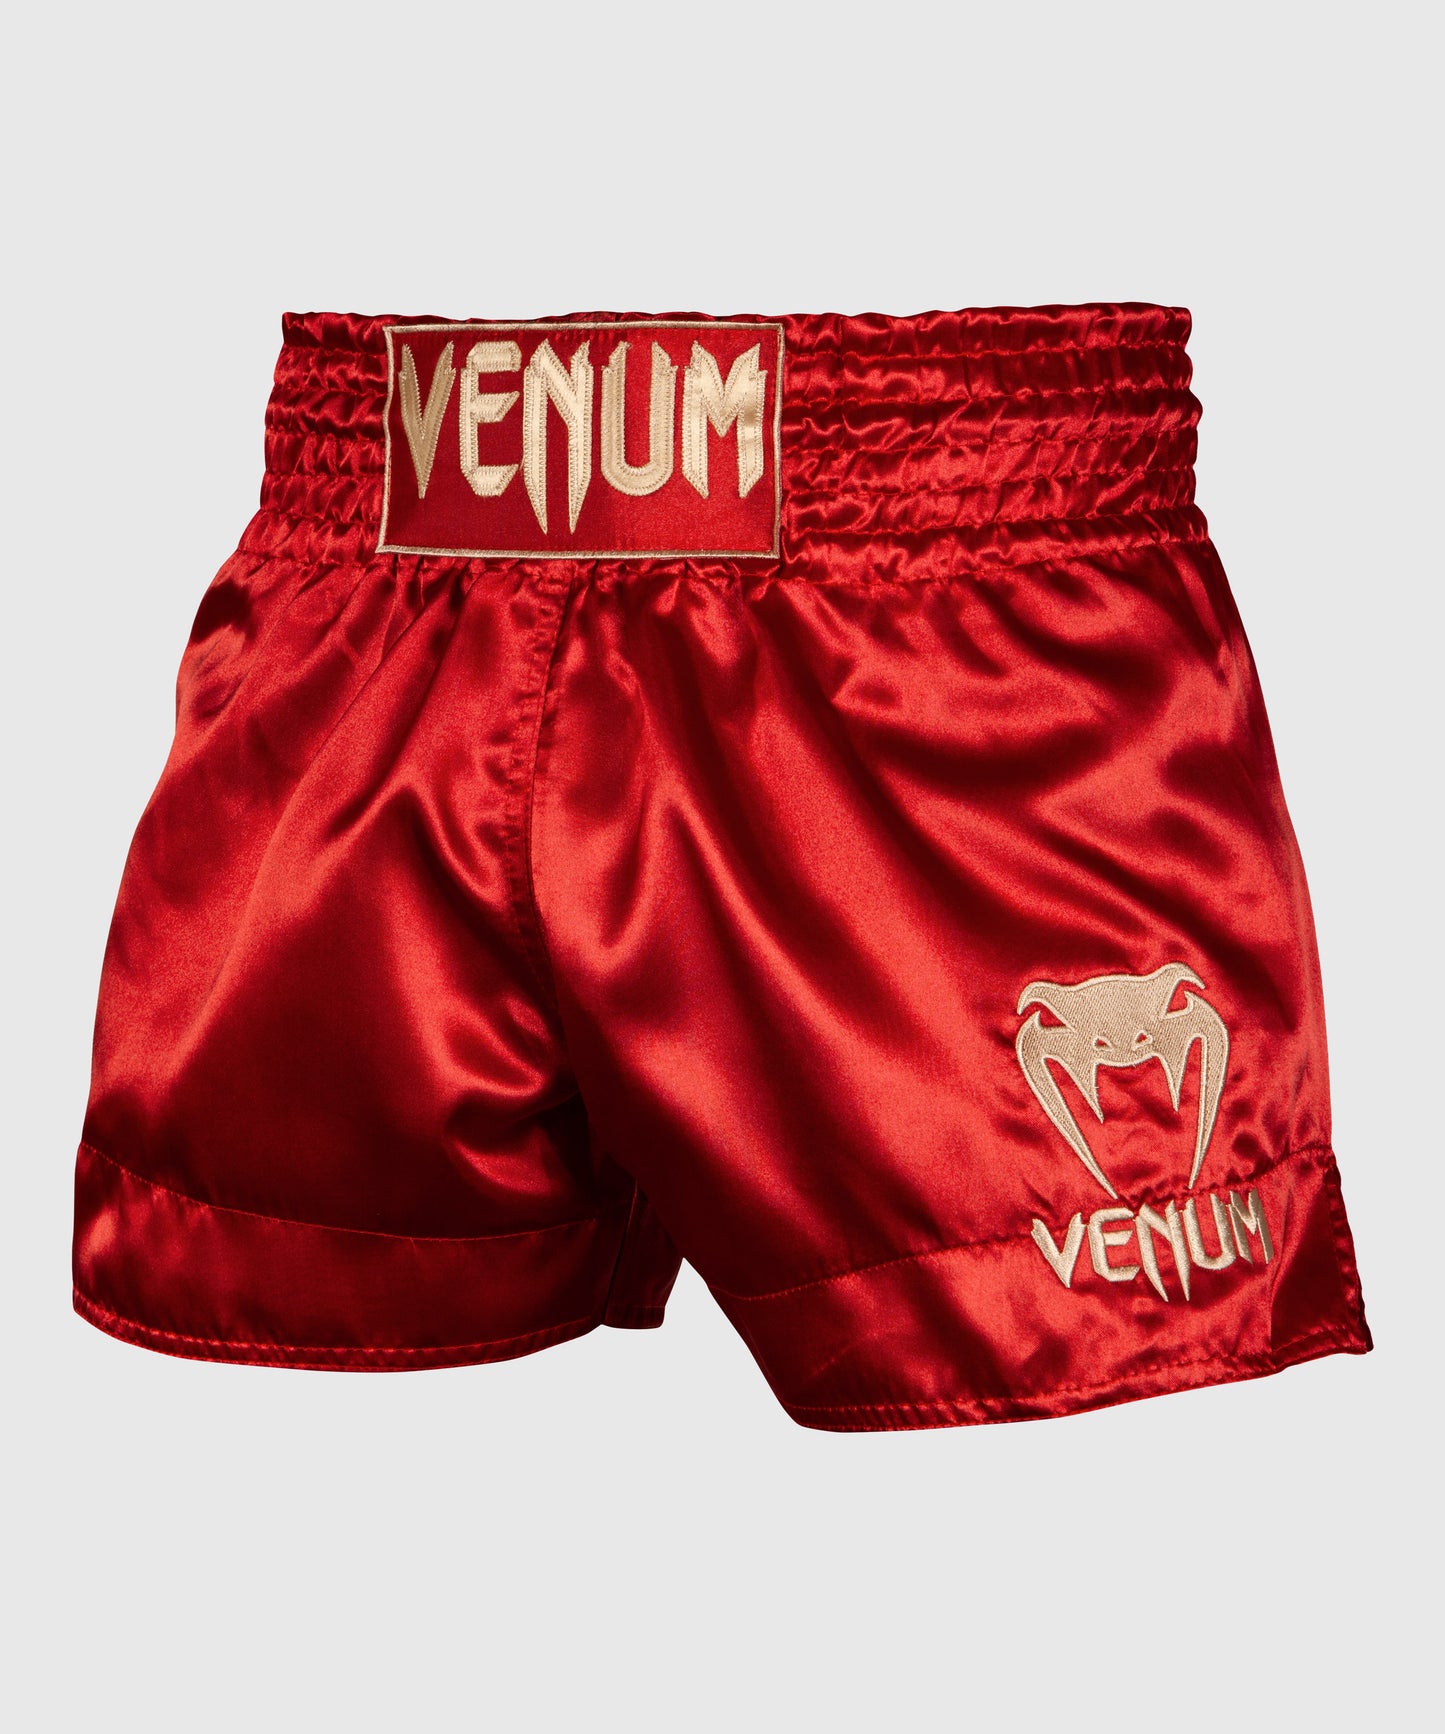 Venum Classic Muay Thai Short - Bordeaux/Or